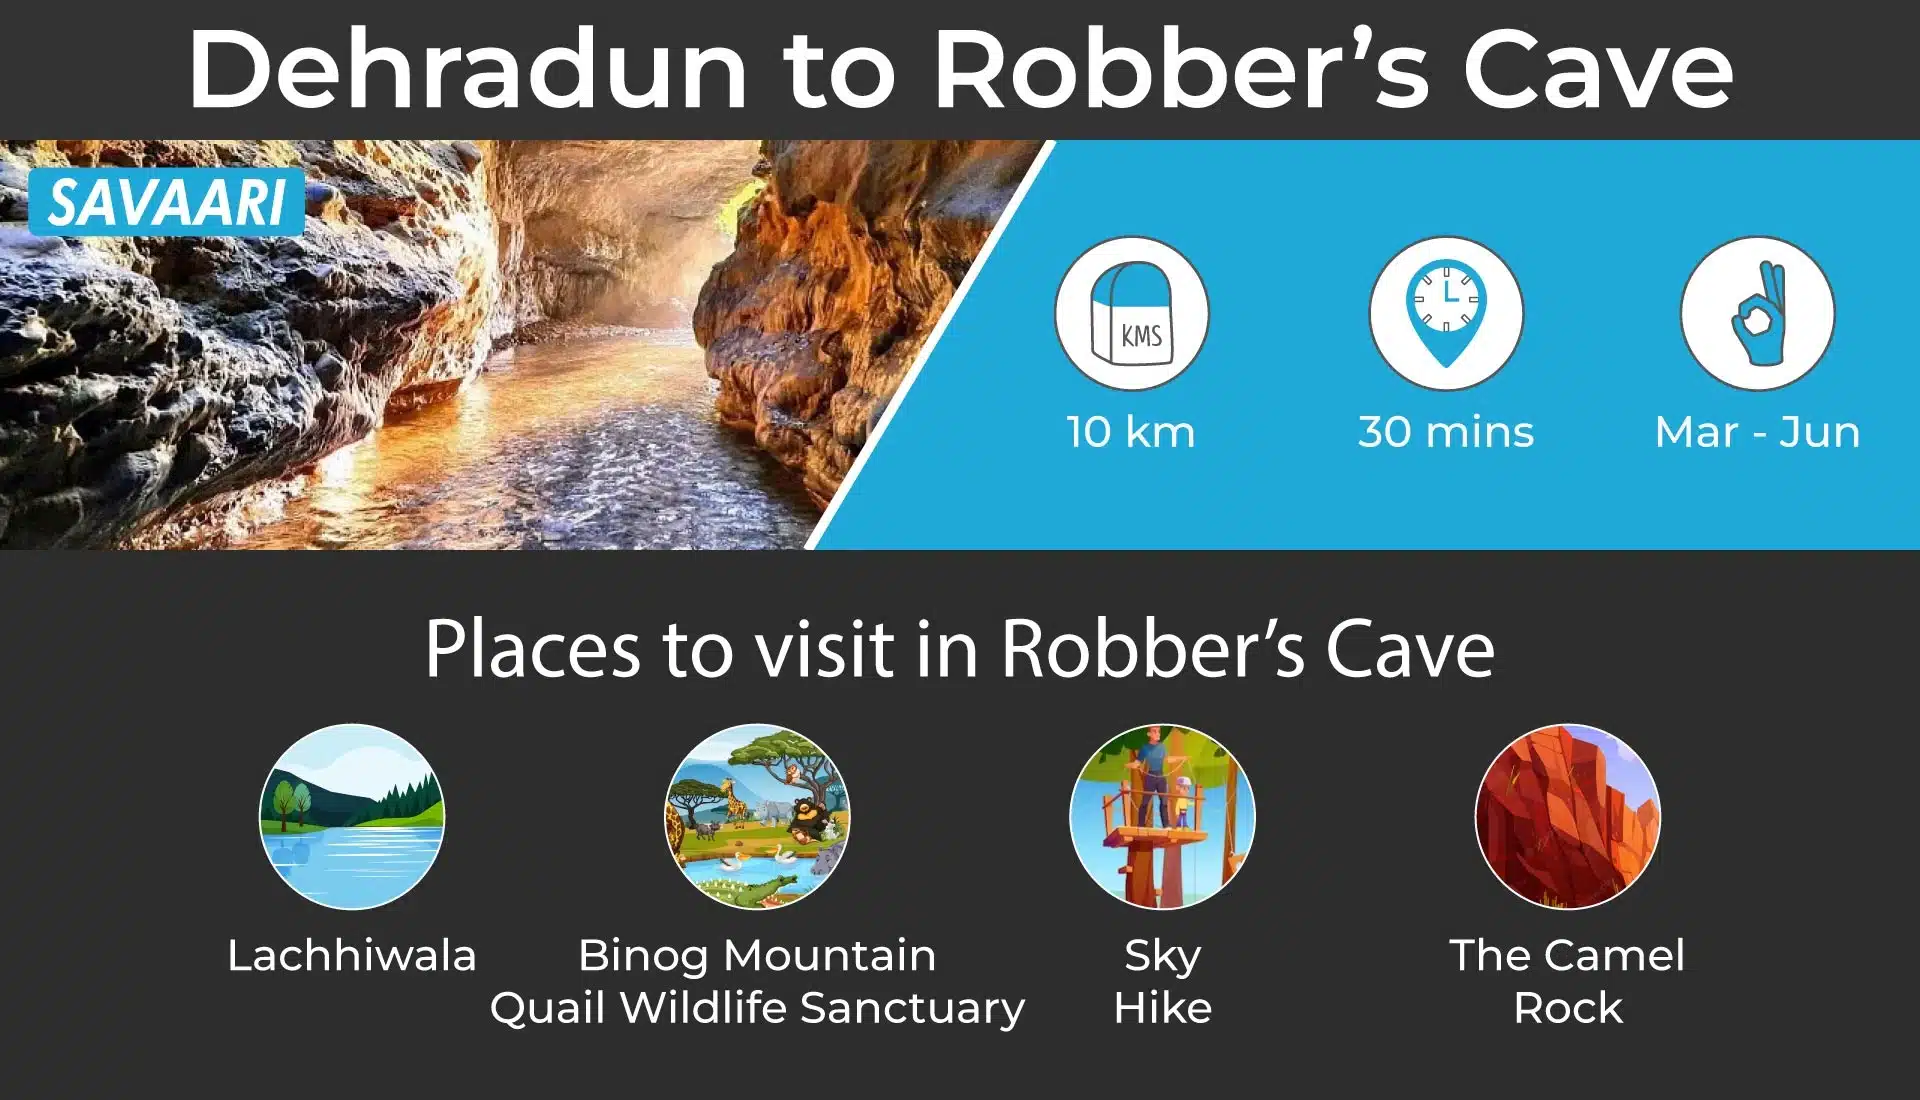 Dehradun to Robbers's cave
